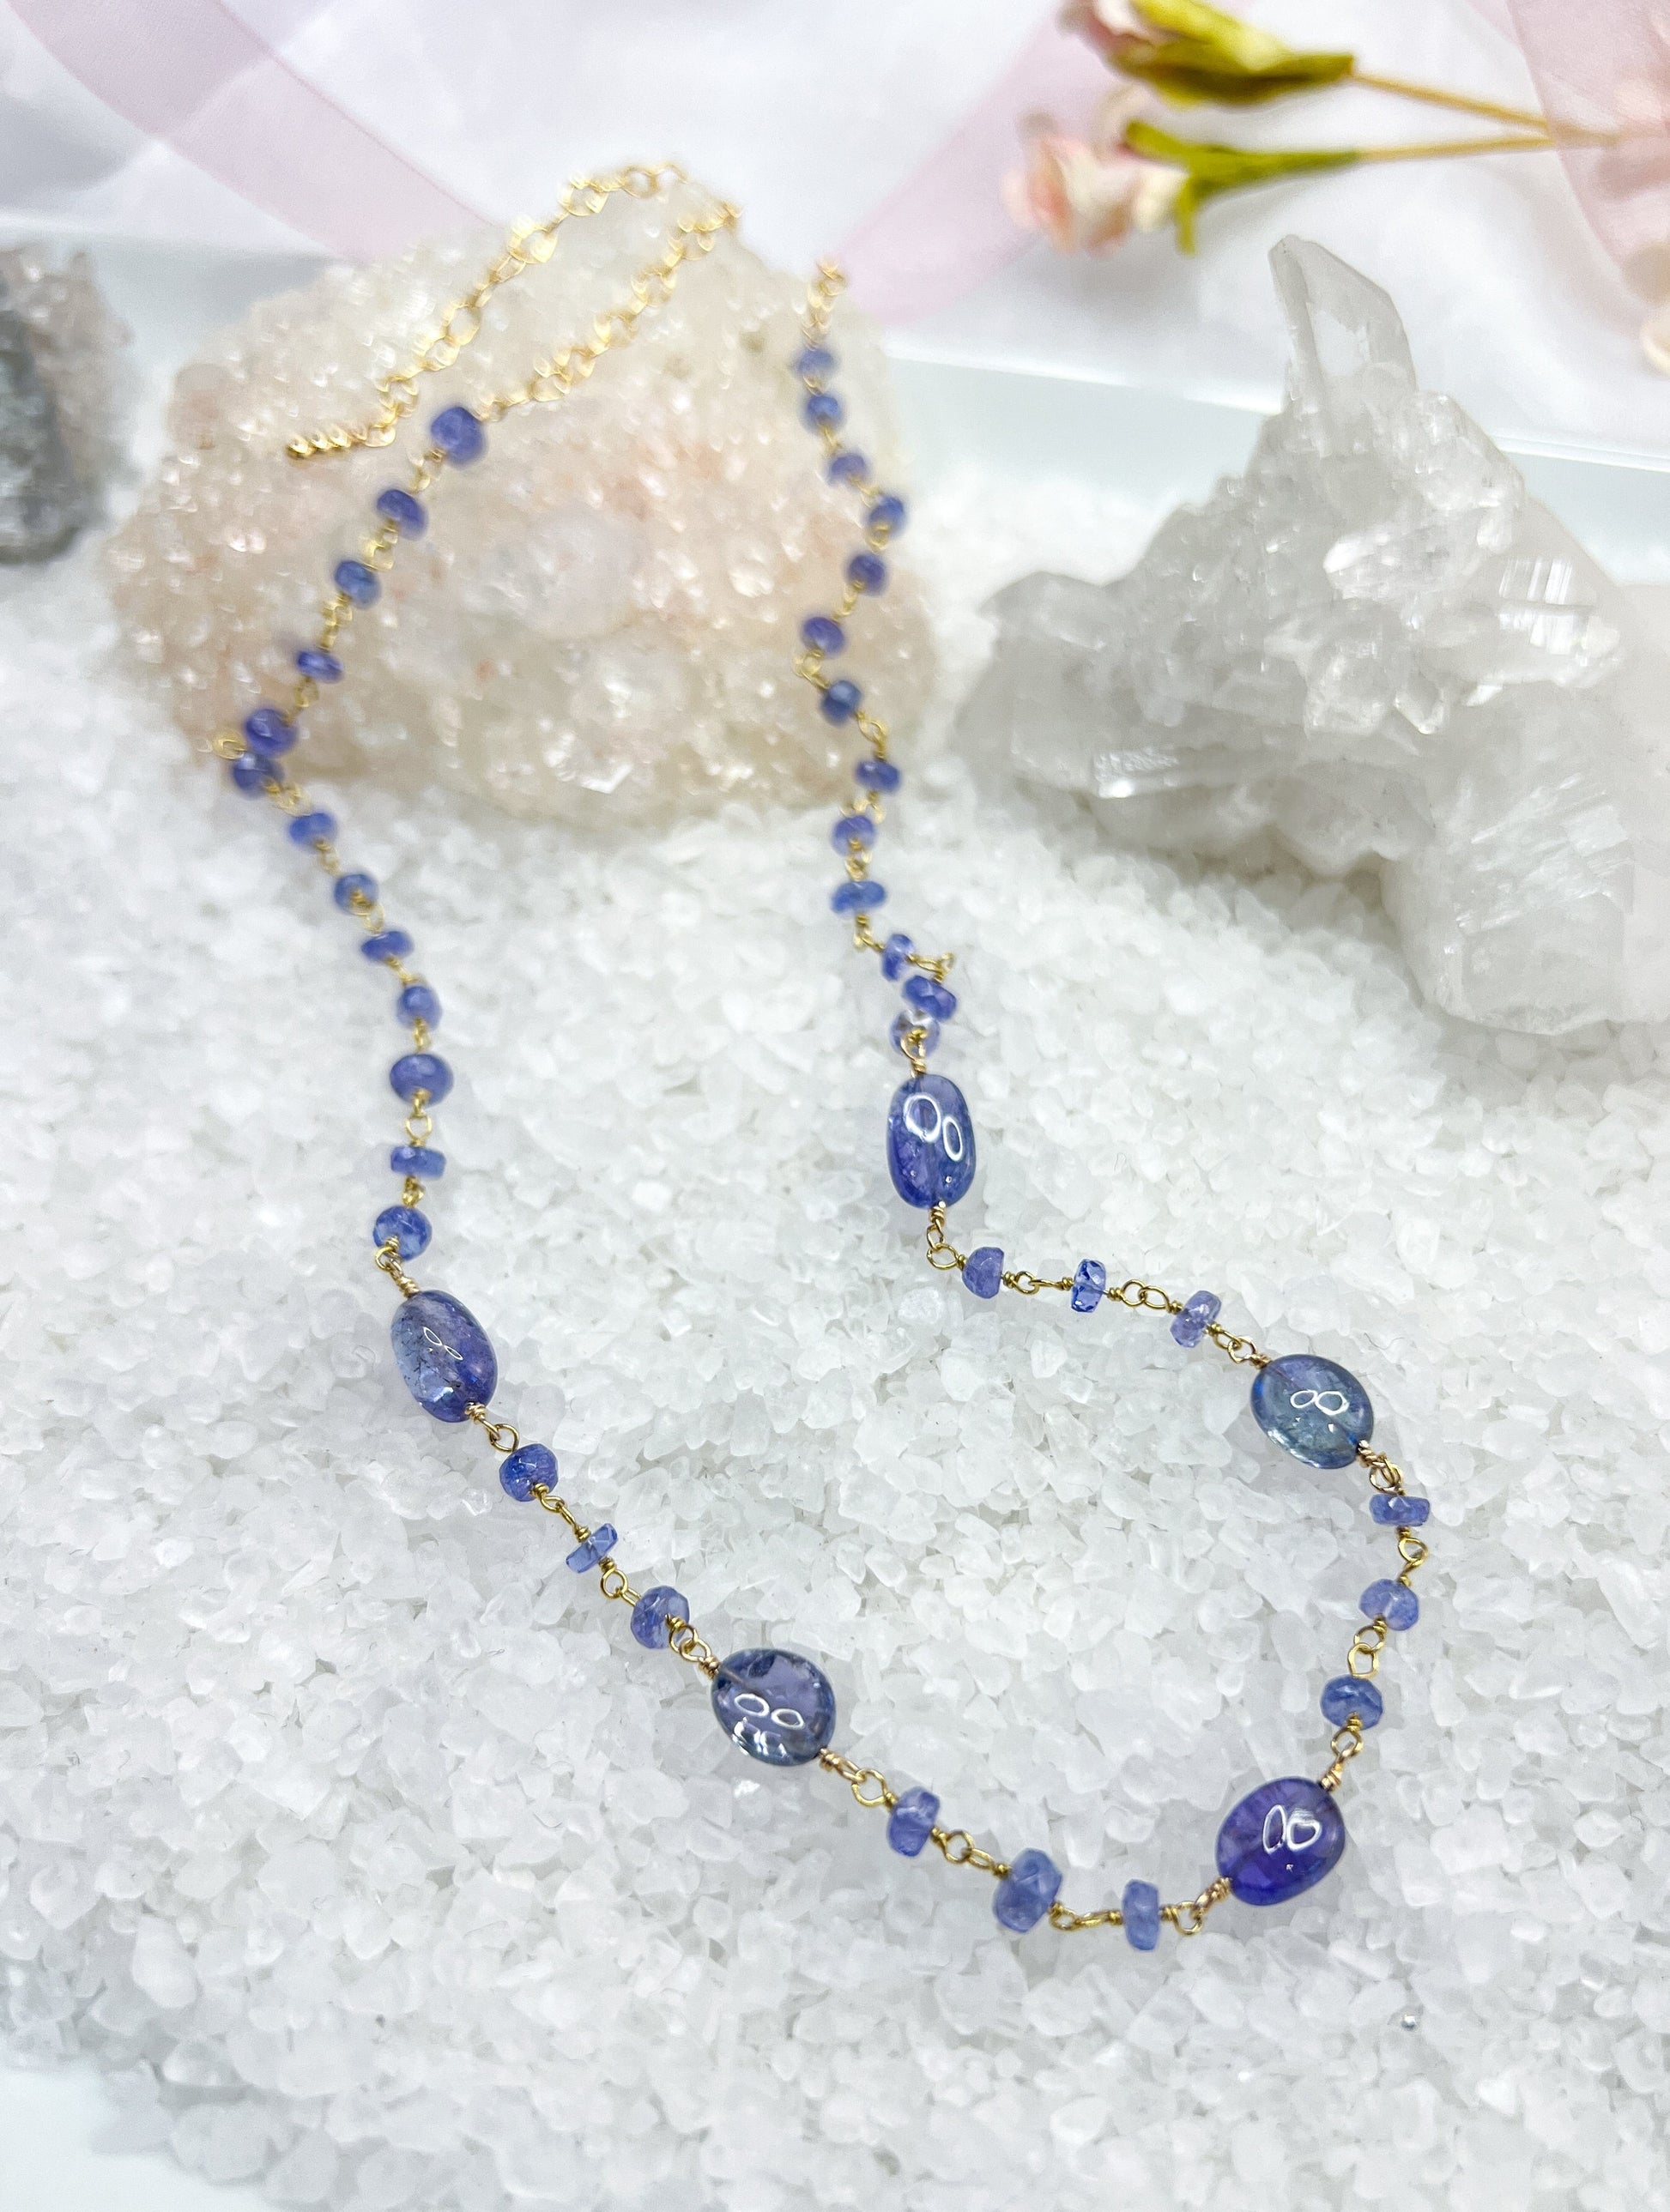 Tanzanite smooth gemstone rosary necklace